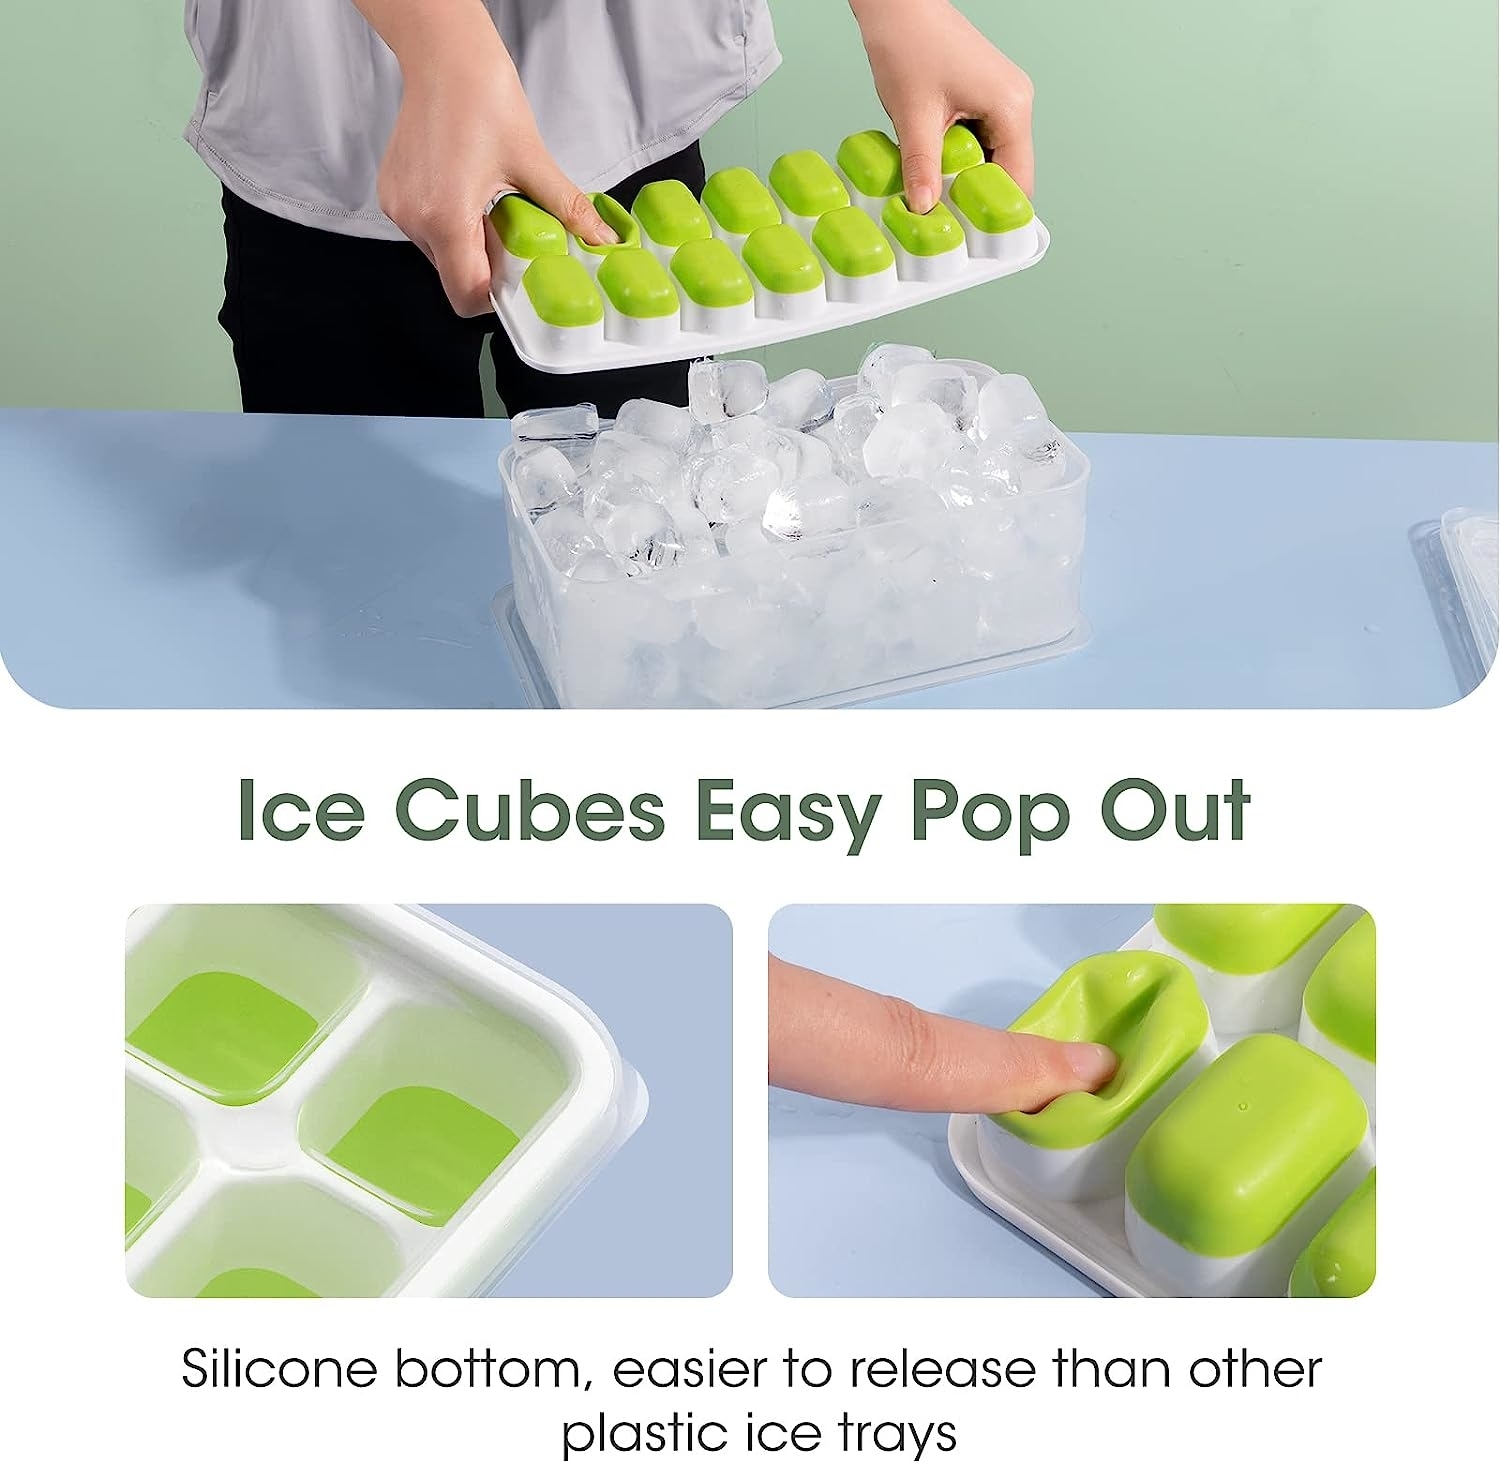 Model using a green ice cube tray